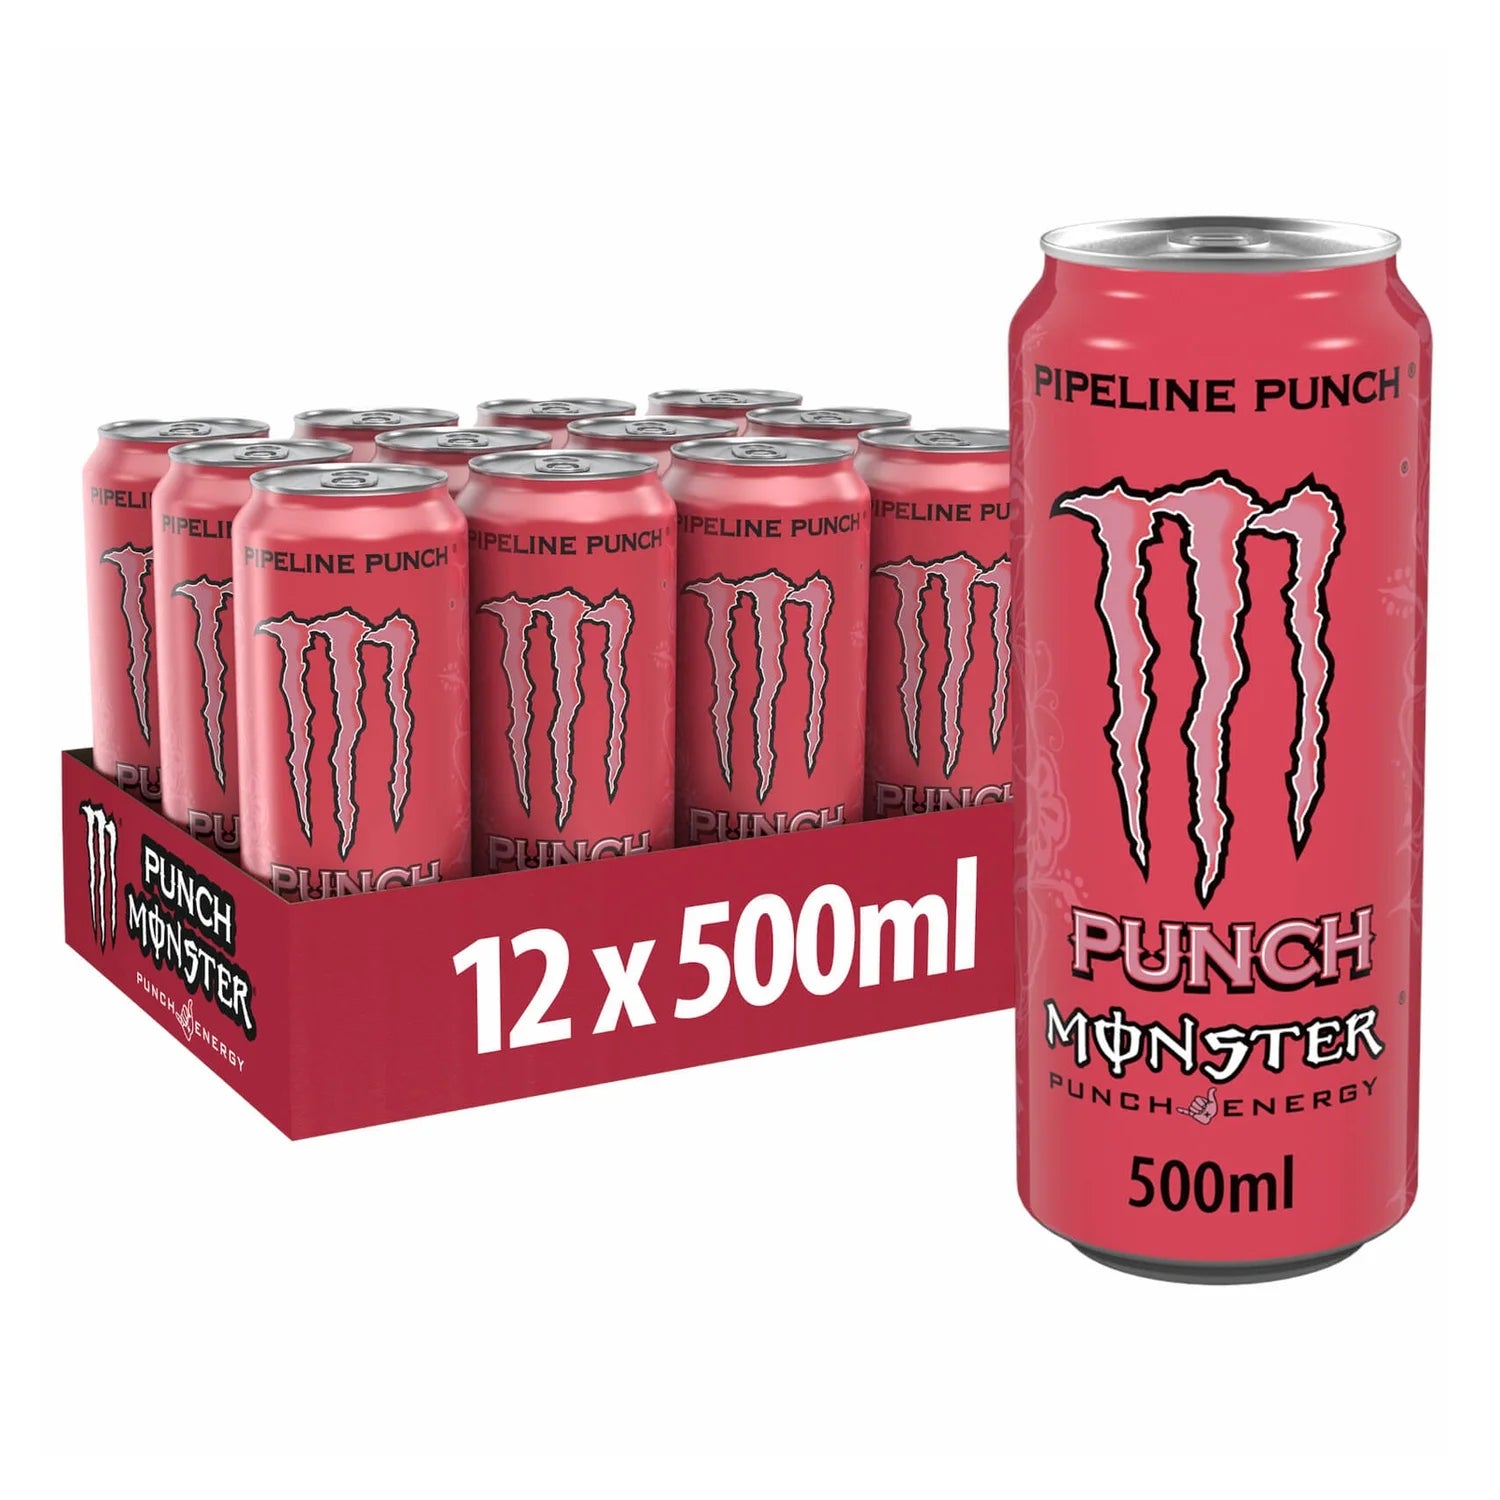 Monster Energy Drink Pipeline Punch - 500ml - Case of 12